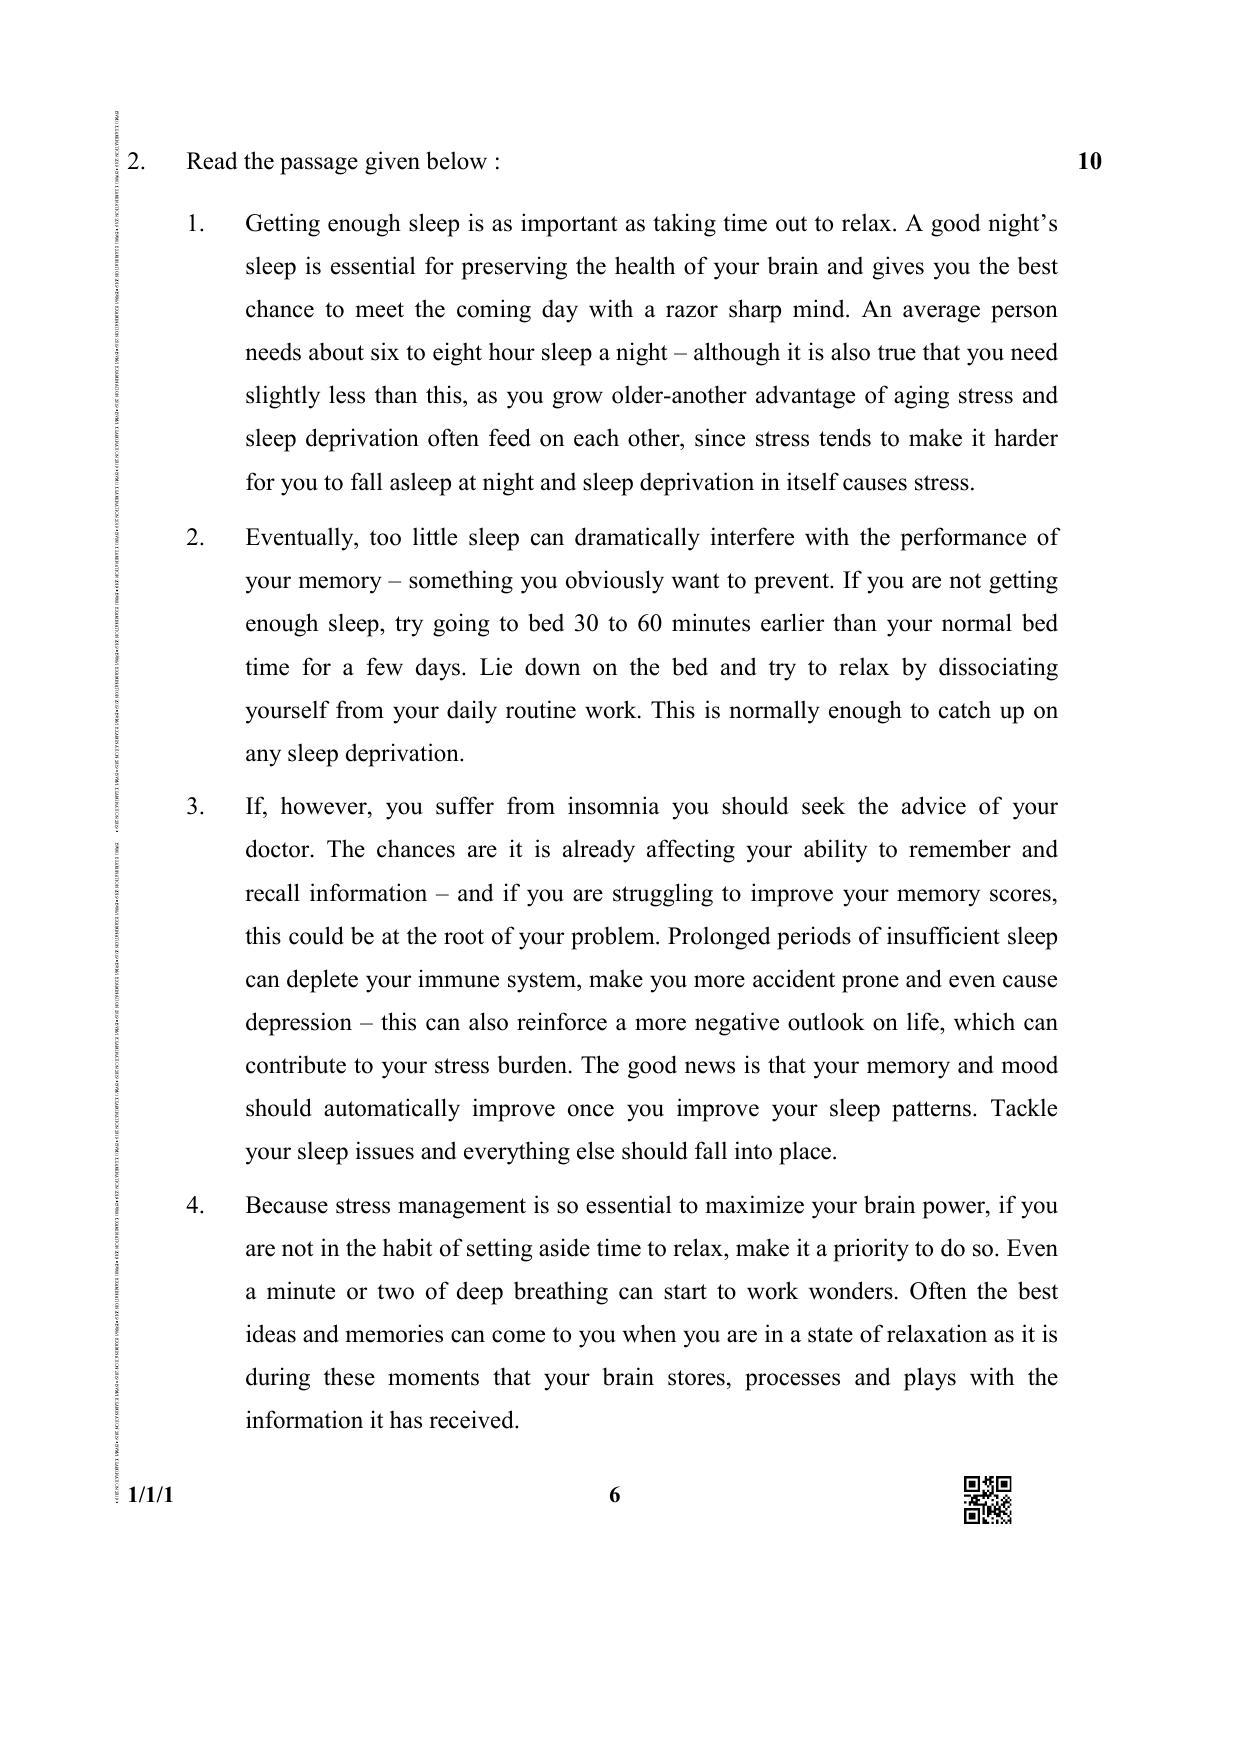 CBSE Class 12 1-1-1 (English Core) 2019 Question Paper - Page 6